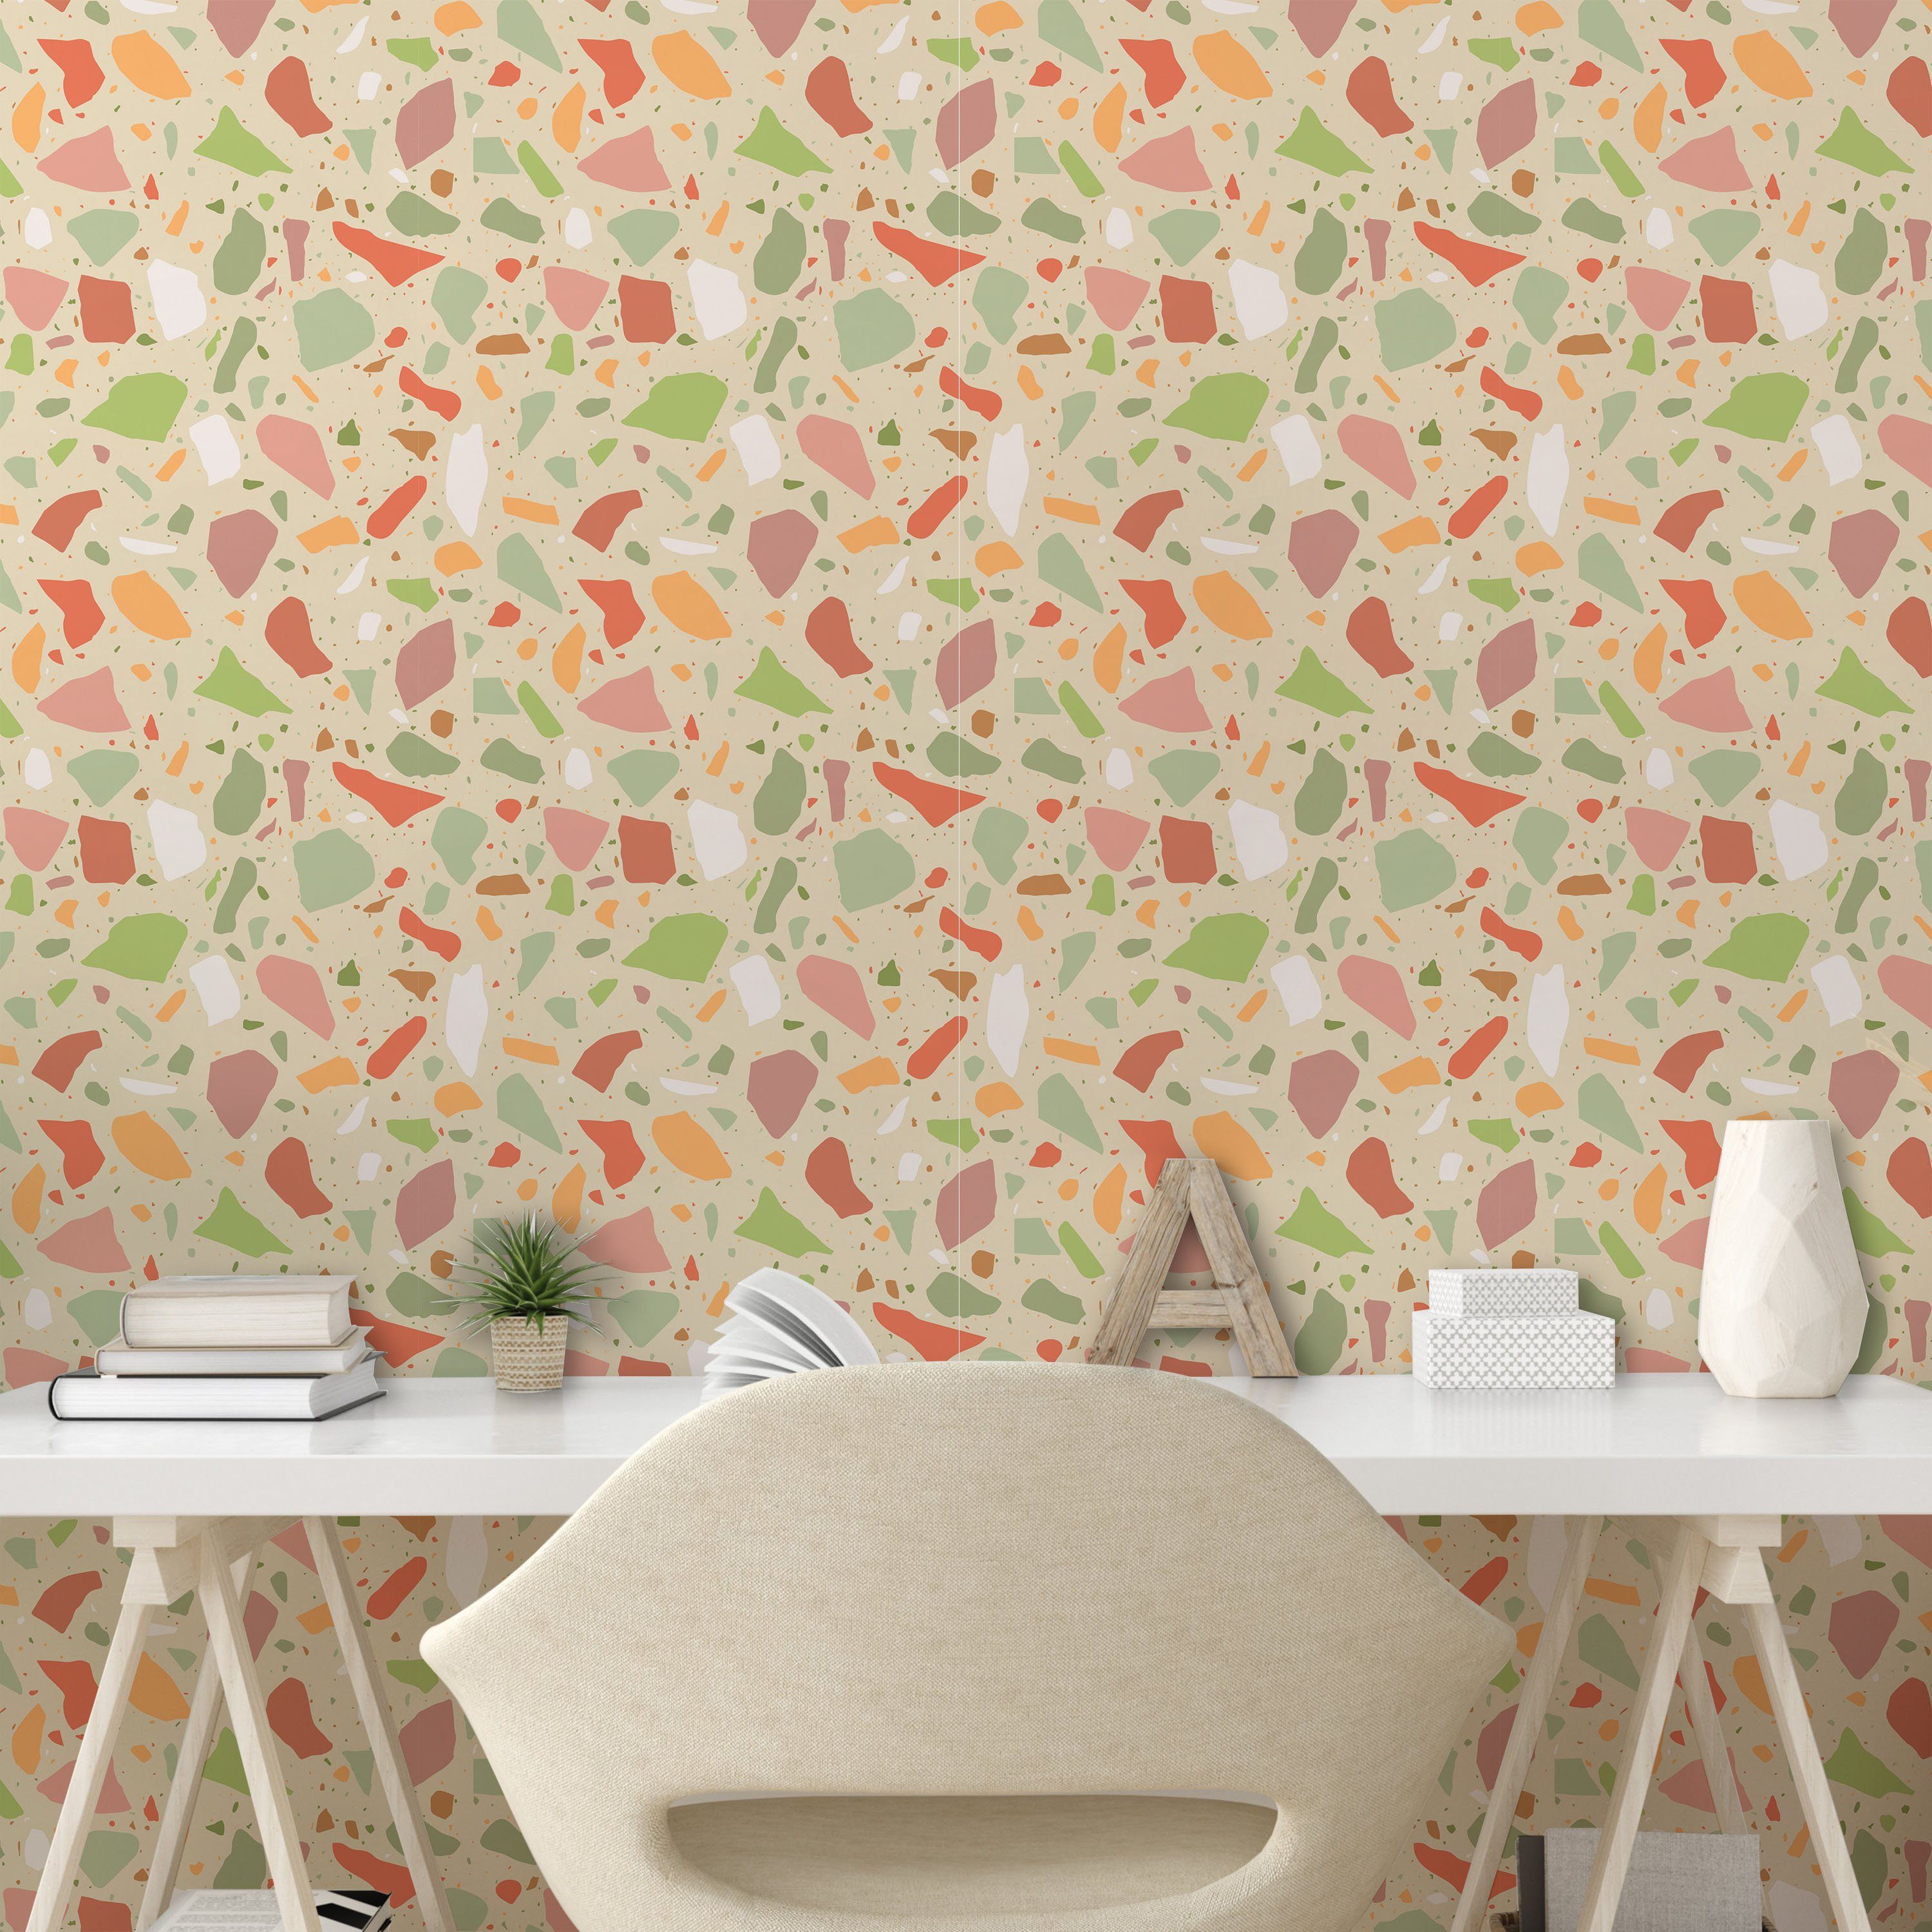 Abakuhaus Vinyltapete selbstklebendes Wohnzimmer Terrazzo Pastell Küchenakzent, Abstrakt Shapes